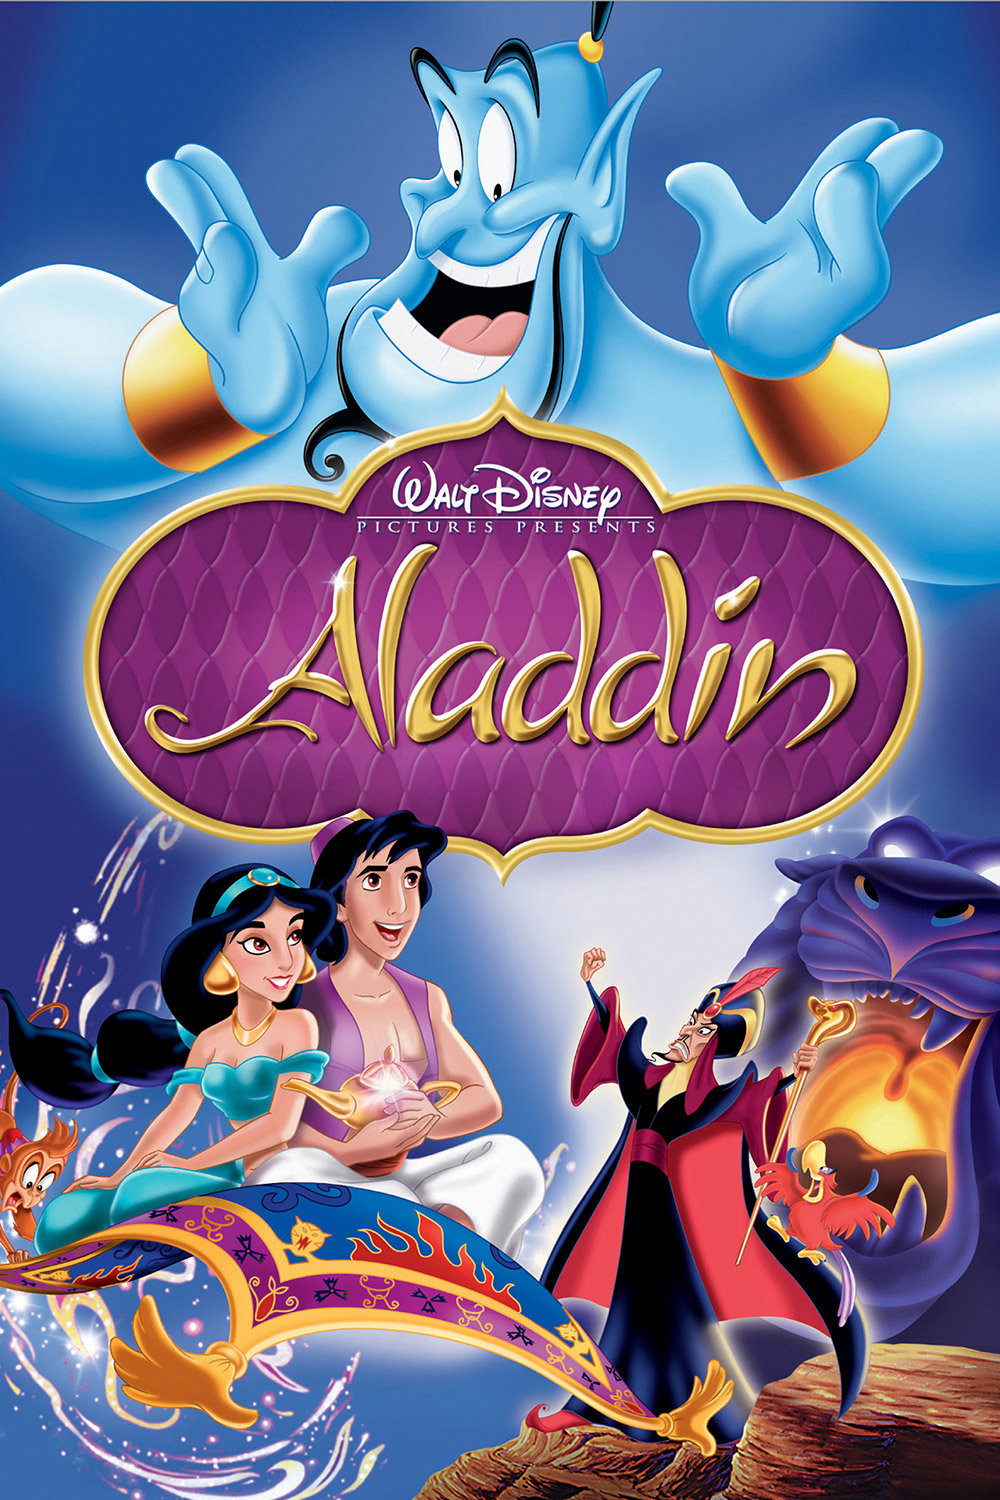 1992 Aladdin movie poster